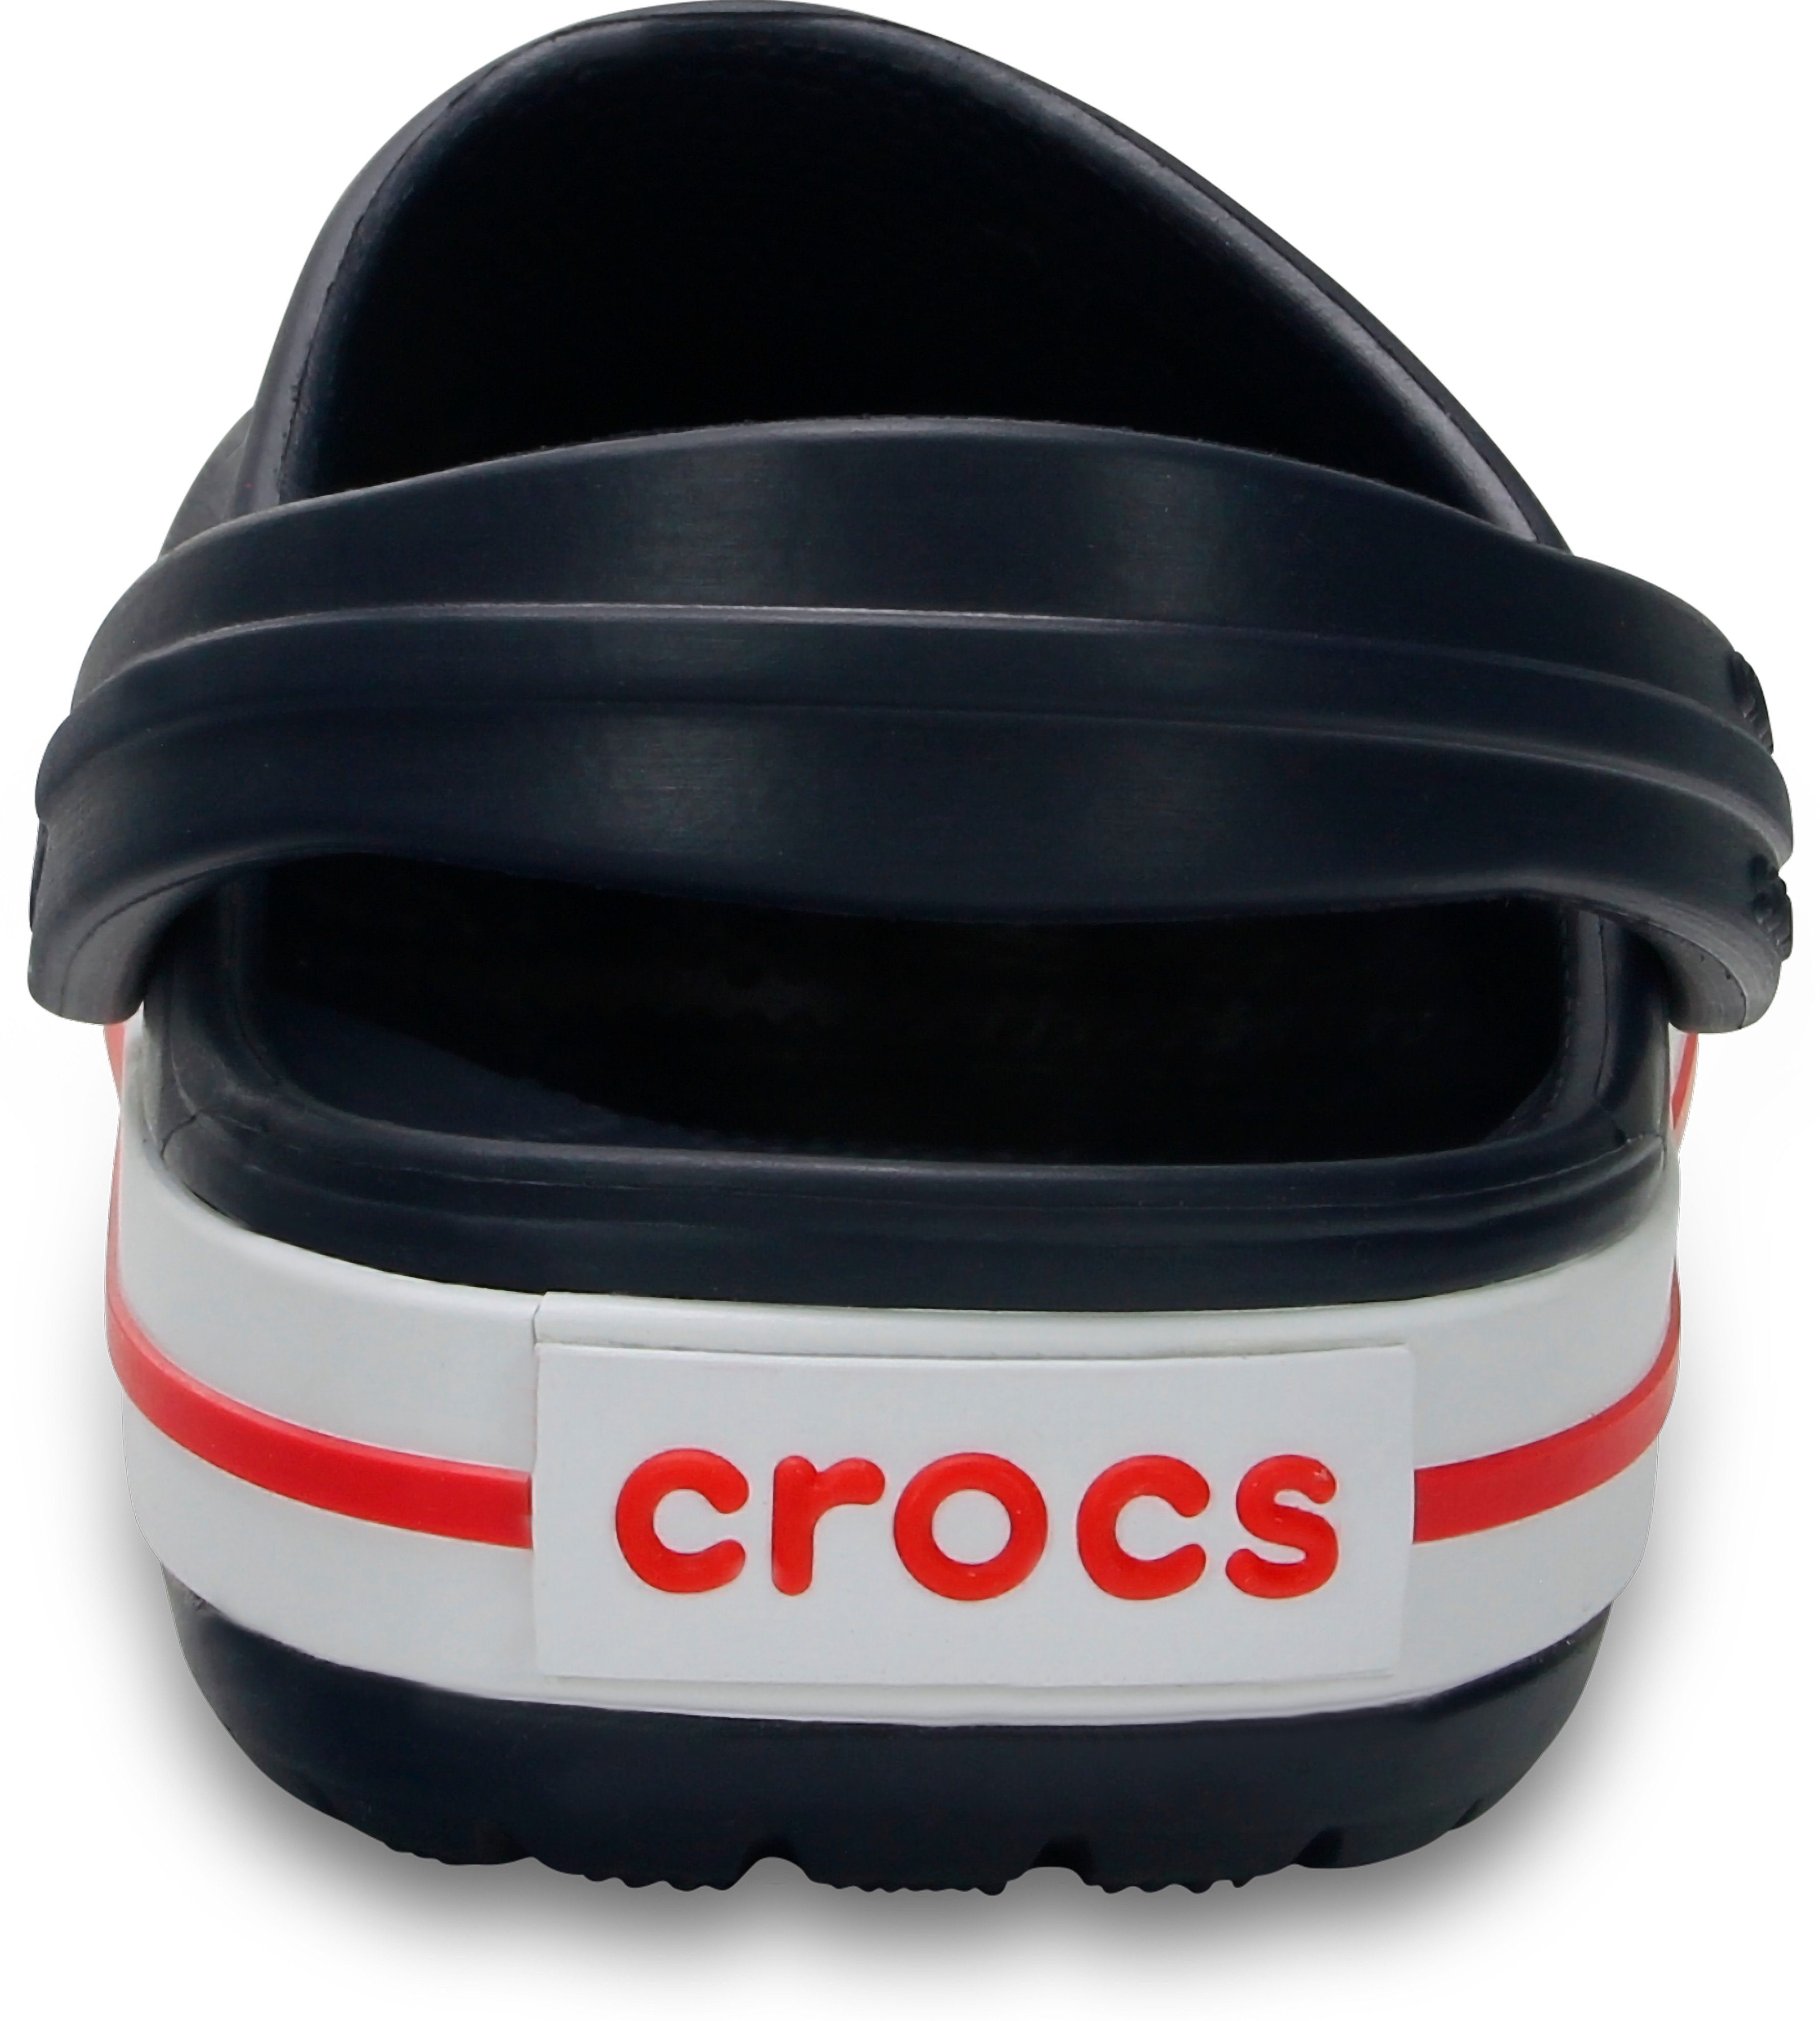 Crocs Crocband Clog kontrastfarbigen navy-red Akzenten Clog K mit